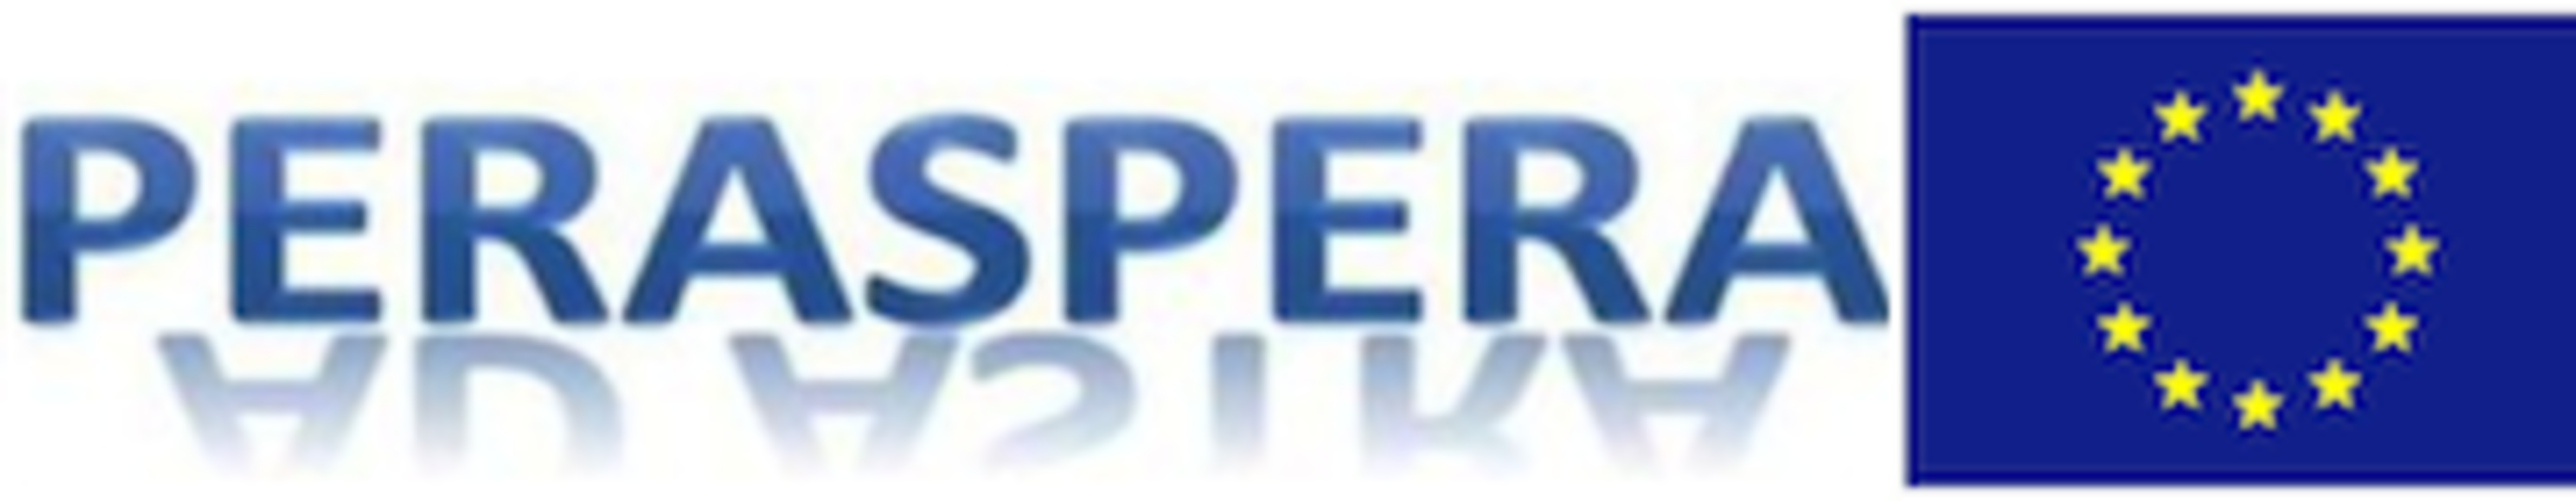 PERASPERA logo